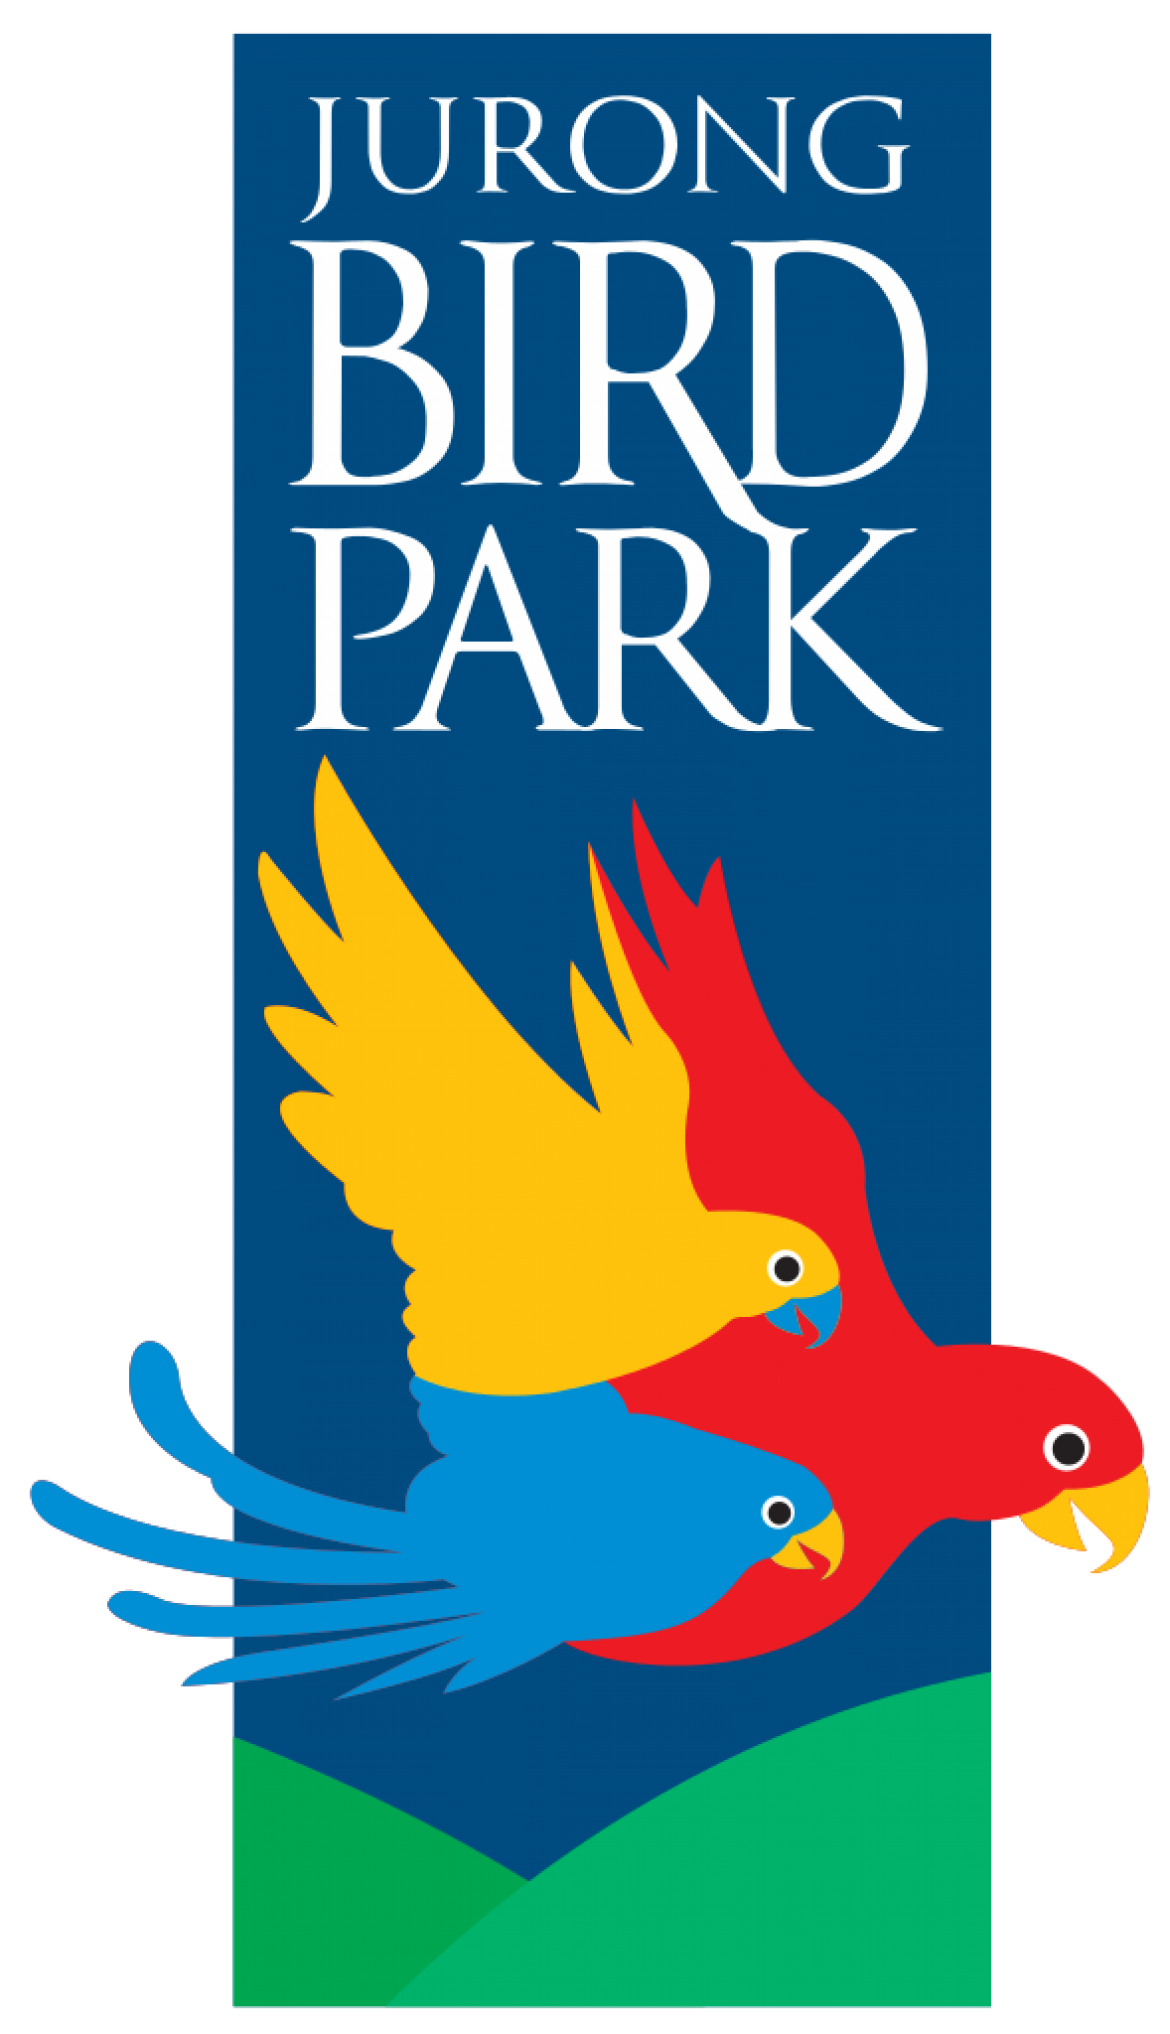 Park birds